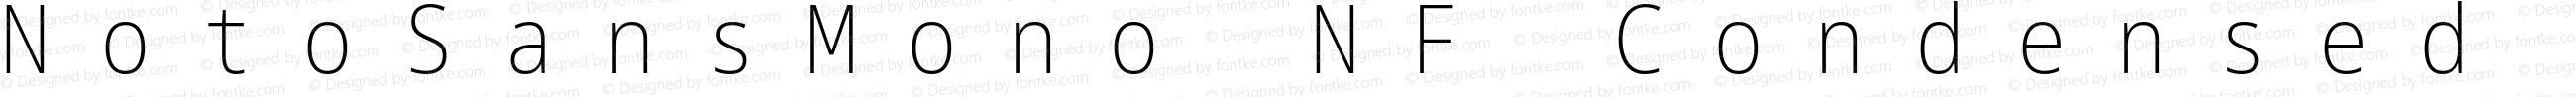 Noto Sans Mono Condensed ExtraLight Nerd Font Complete Mono Windows Compatible